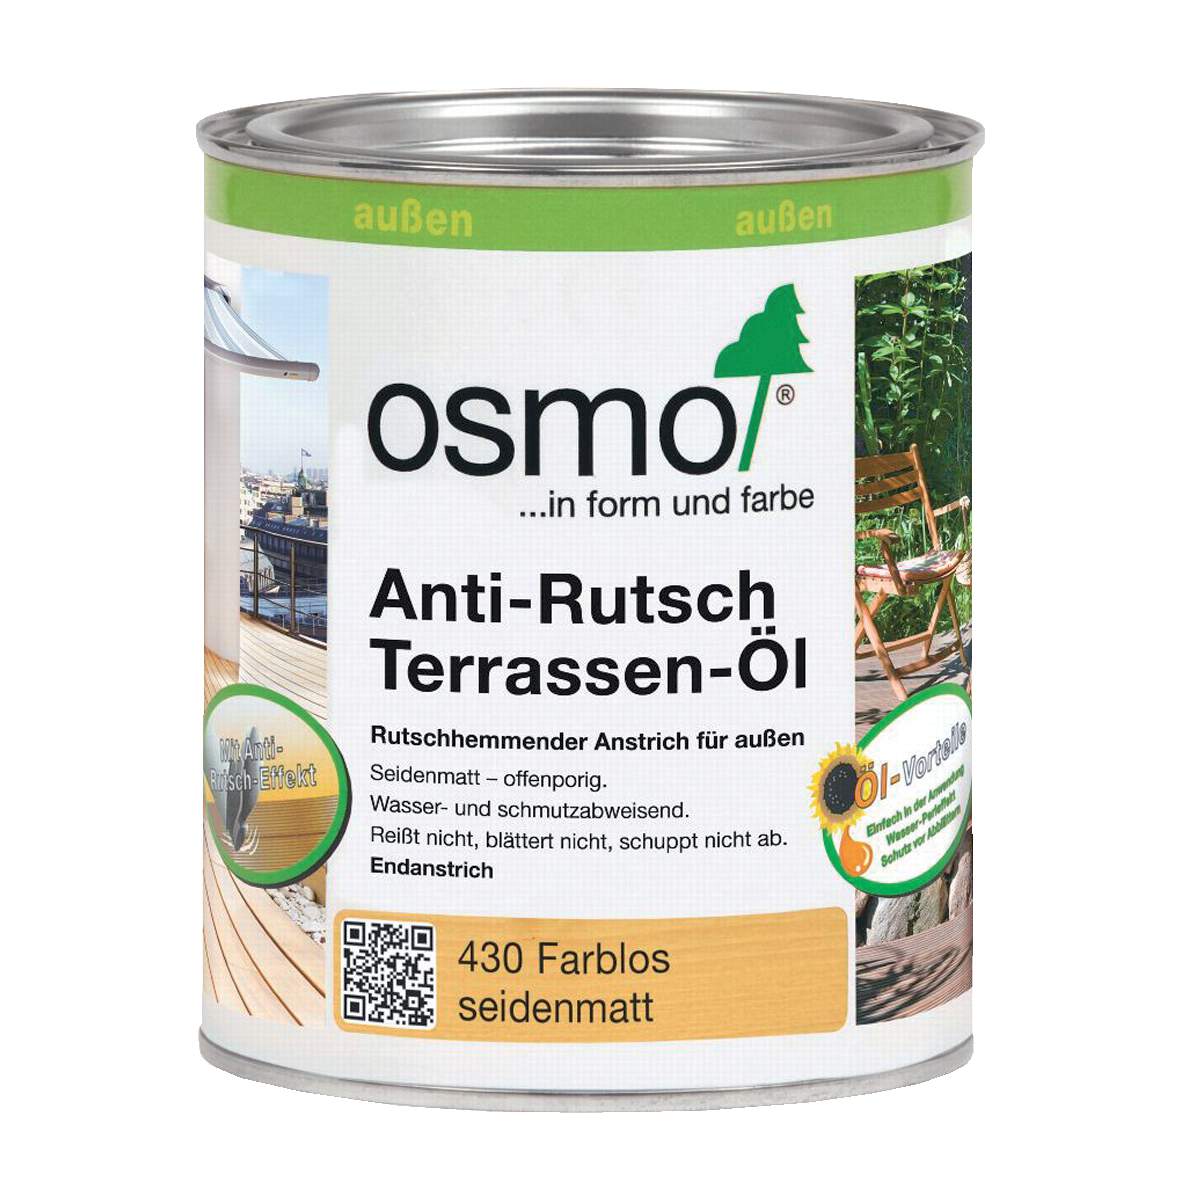 1198198 - Anti-Rutsch Terrassen-Öl